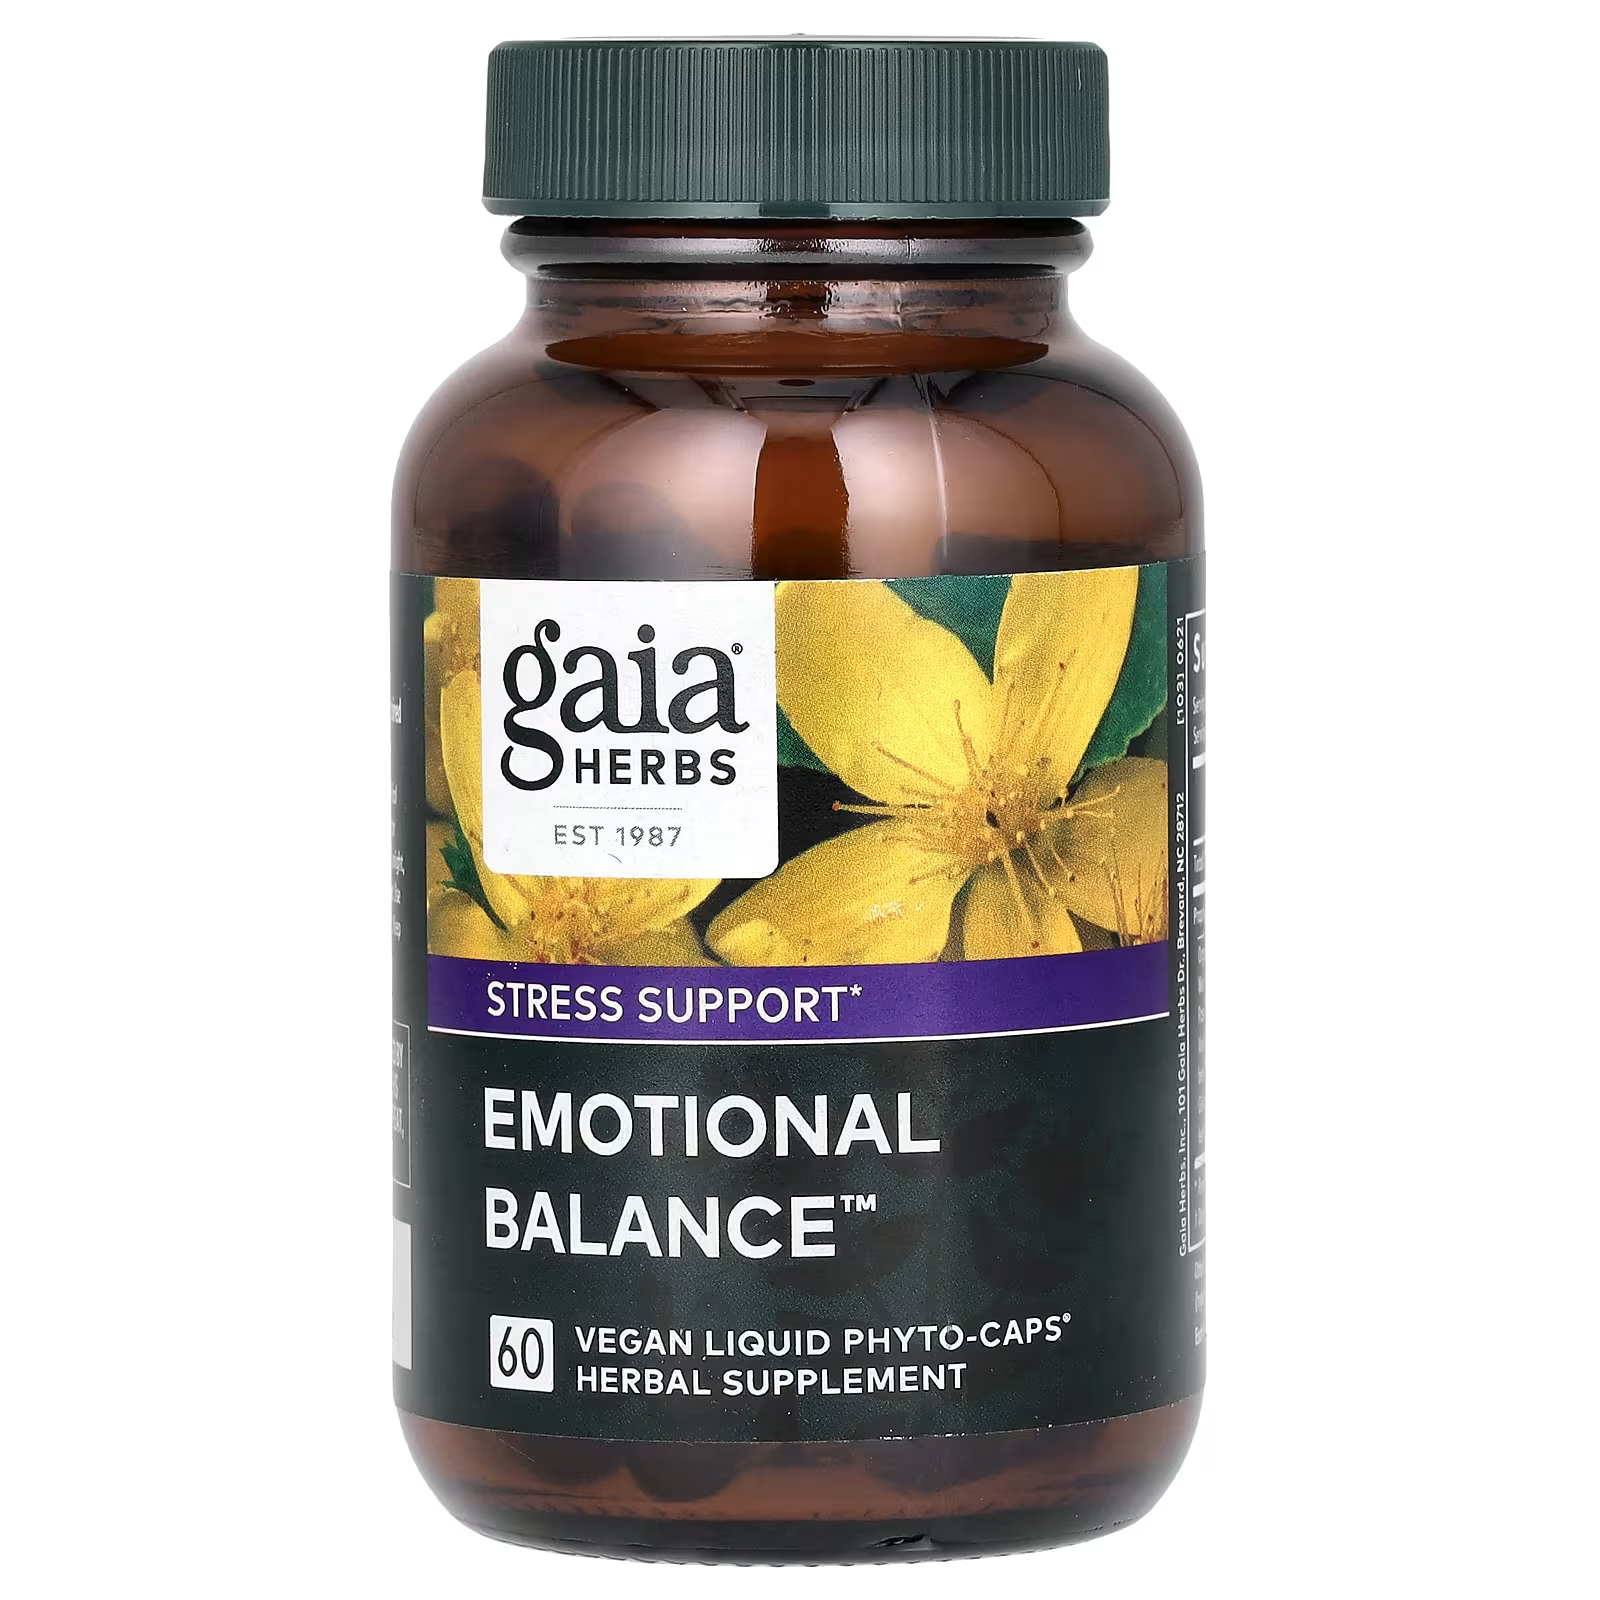 Травяная добавка Gaia Herbs Emotional Balance, 60 жидких фитокапсул